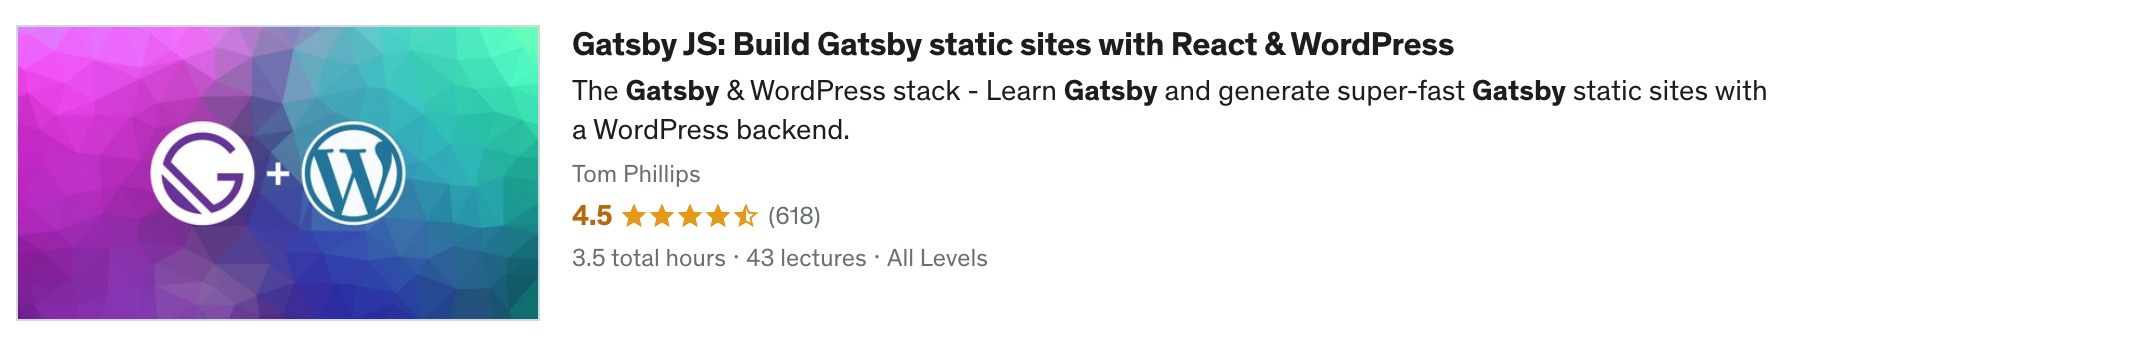 Gatsby JS: Build Gatsby static sites with React & WordPress